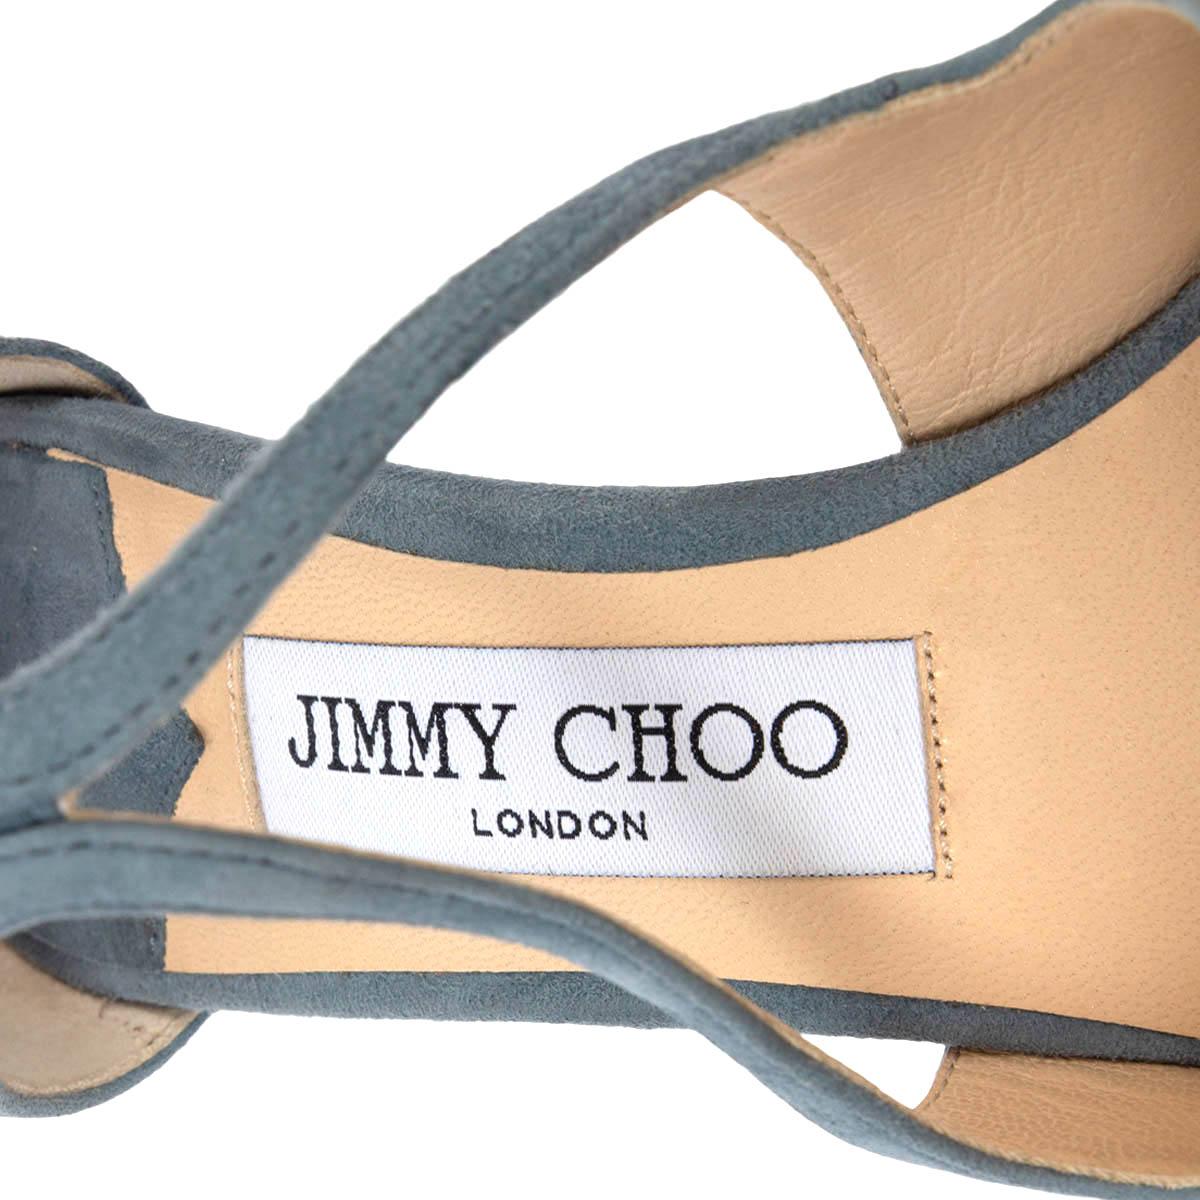 JIMMY CHOO Dusk blue suede LANCER 100 Pointed Toe Pumps Pumps Shoes 36 3